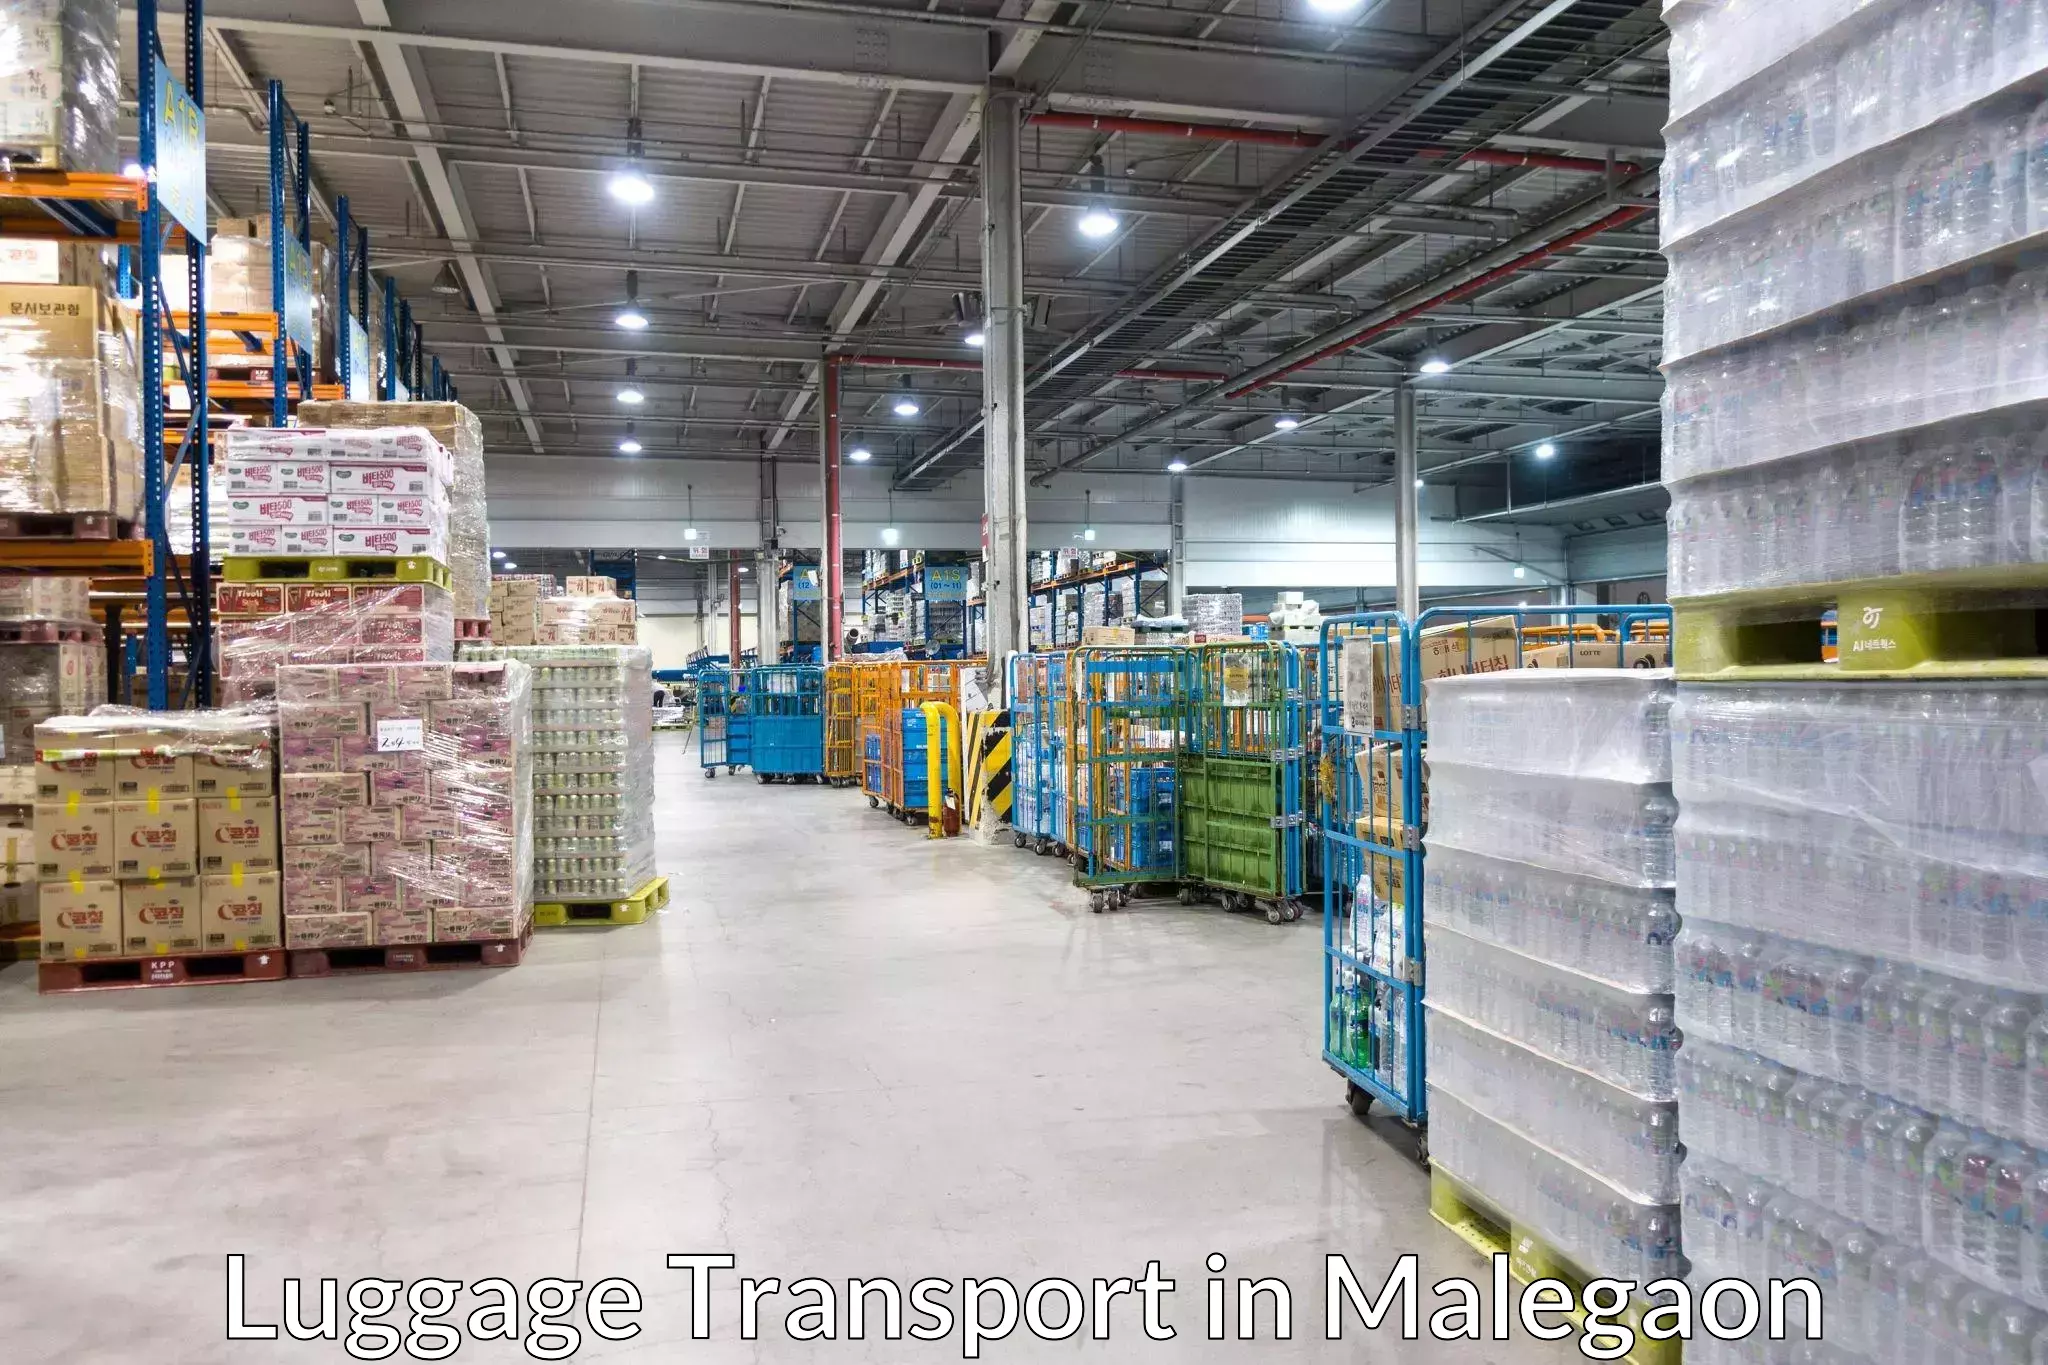 Luggage shipment processing in Malegaon